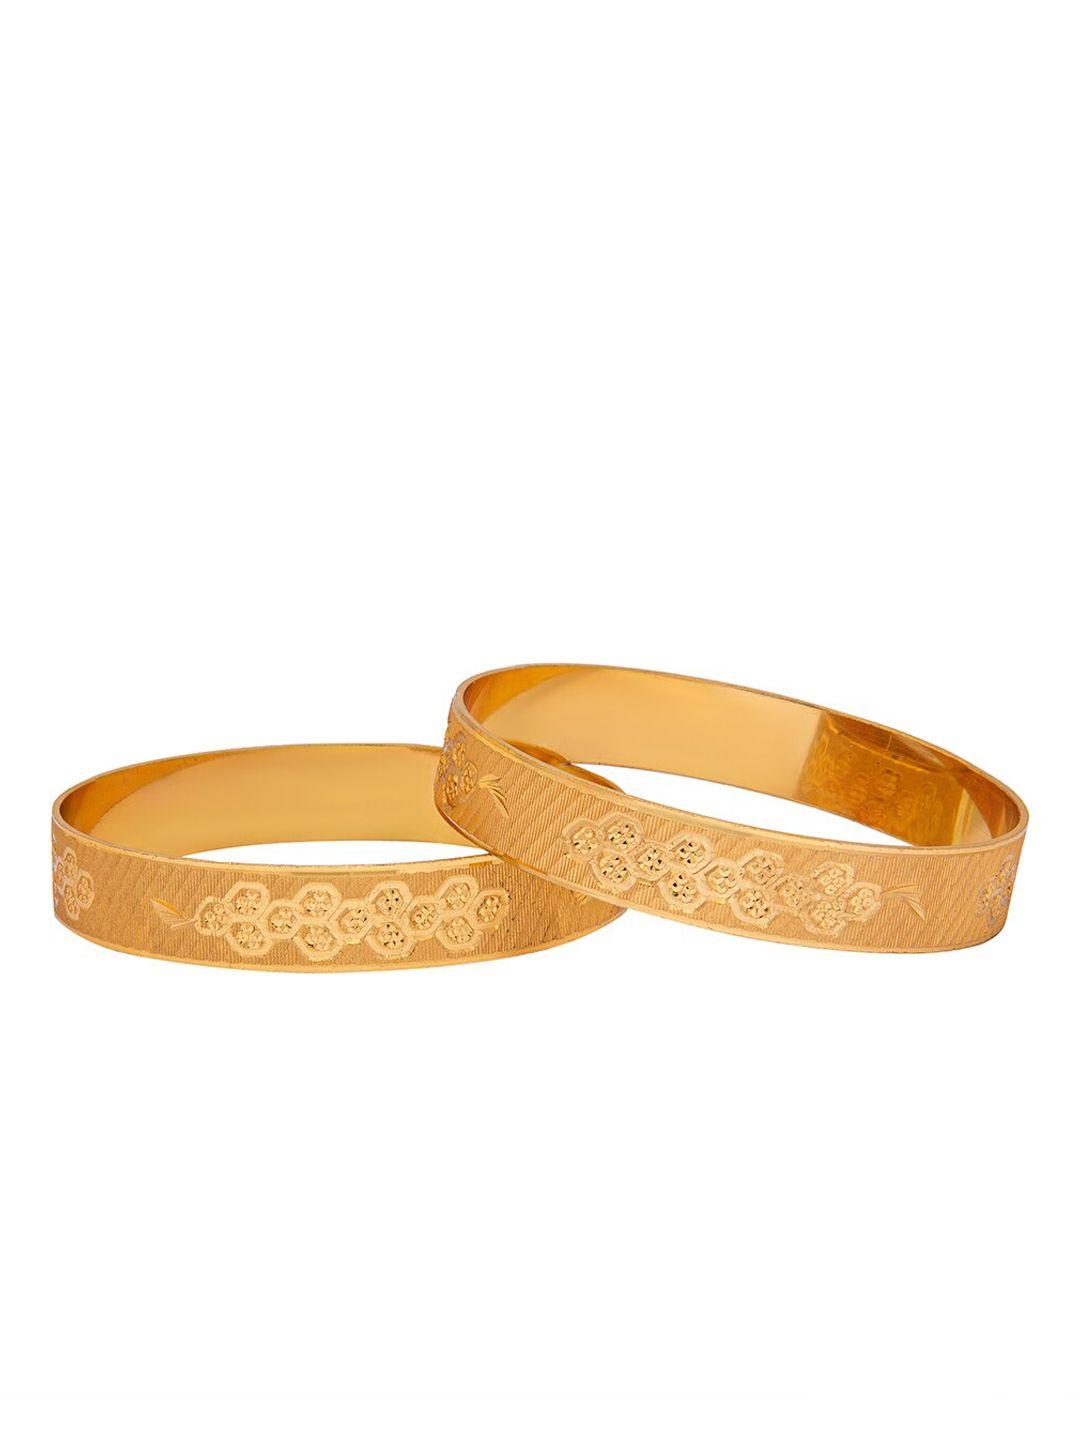 shining-jewel---by-shivansh-set-of-2-gold-plated-designed-bangles